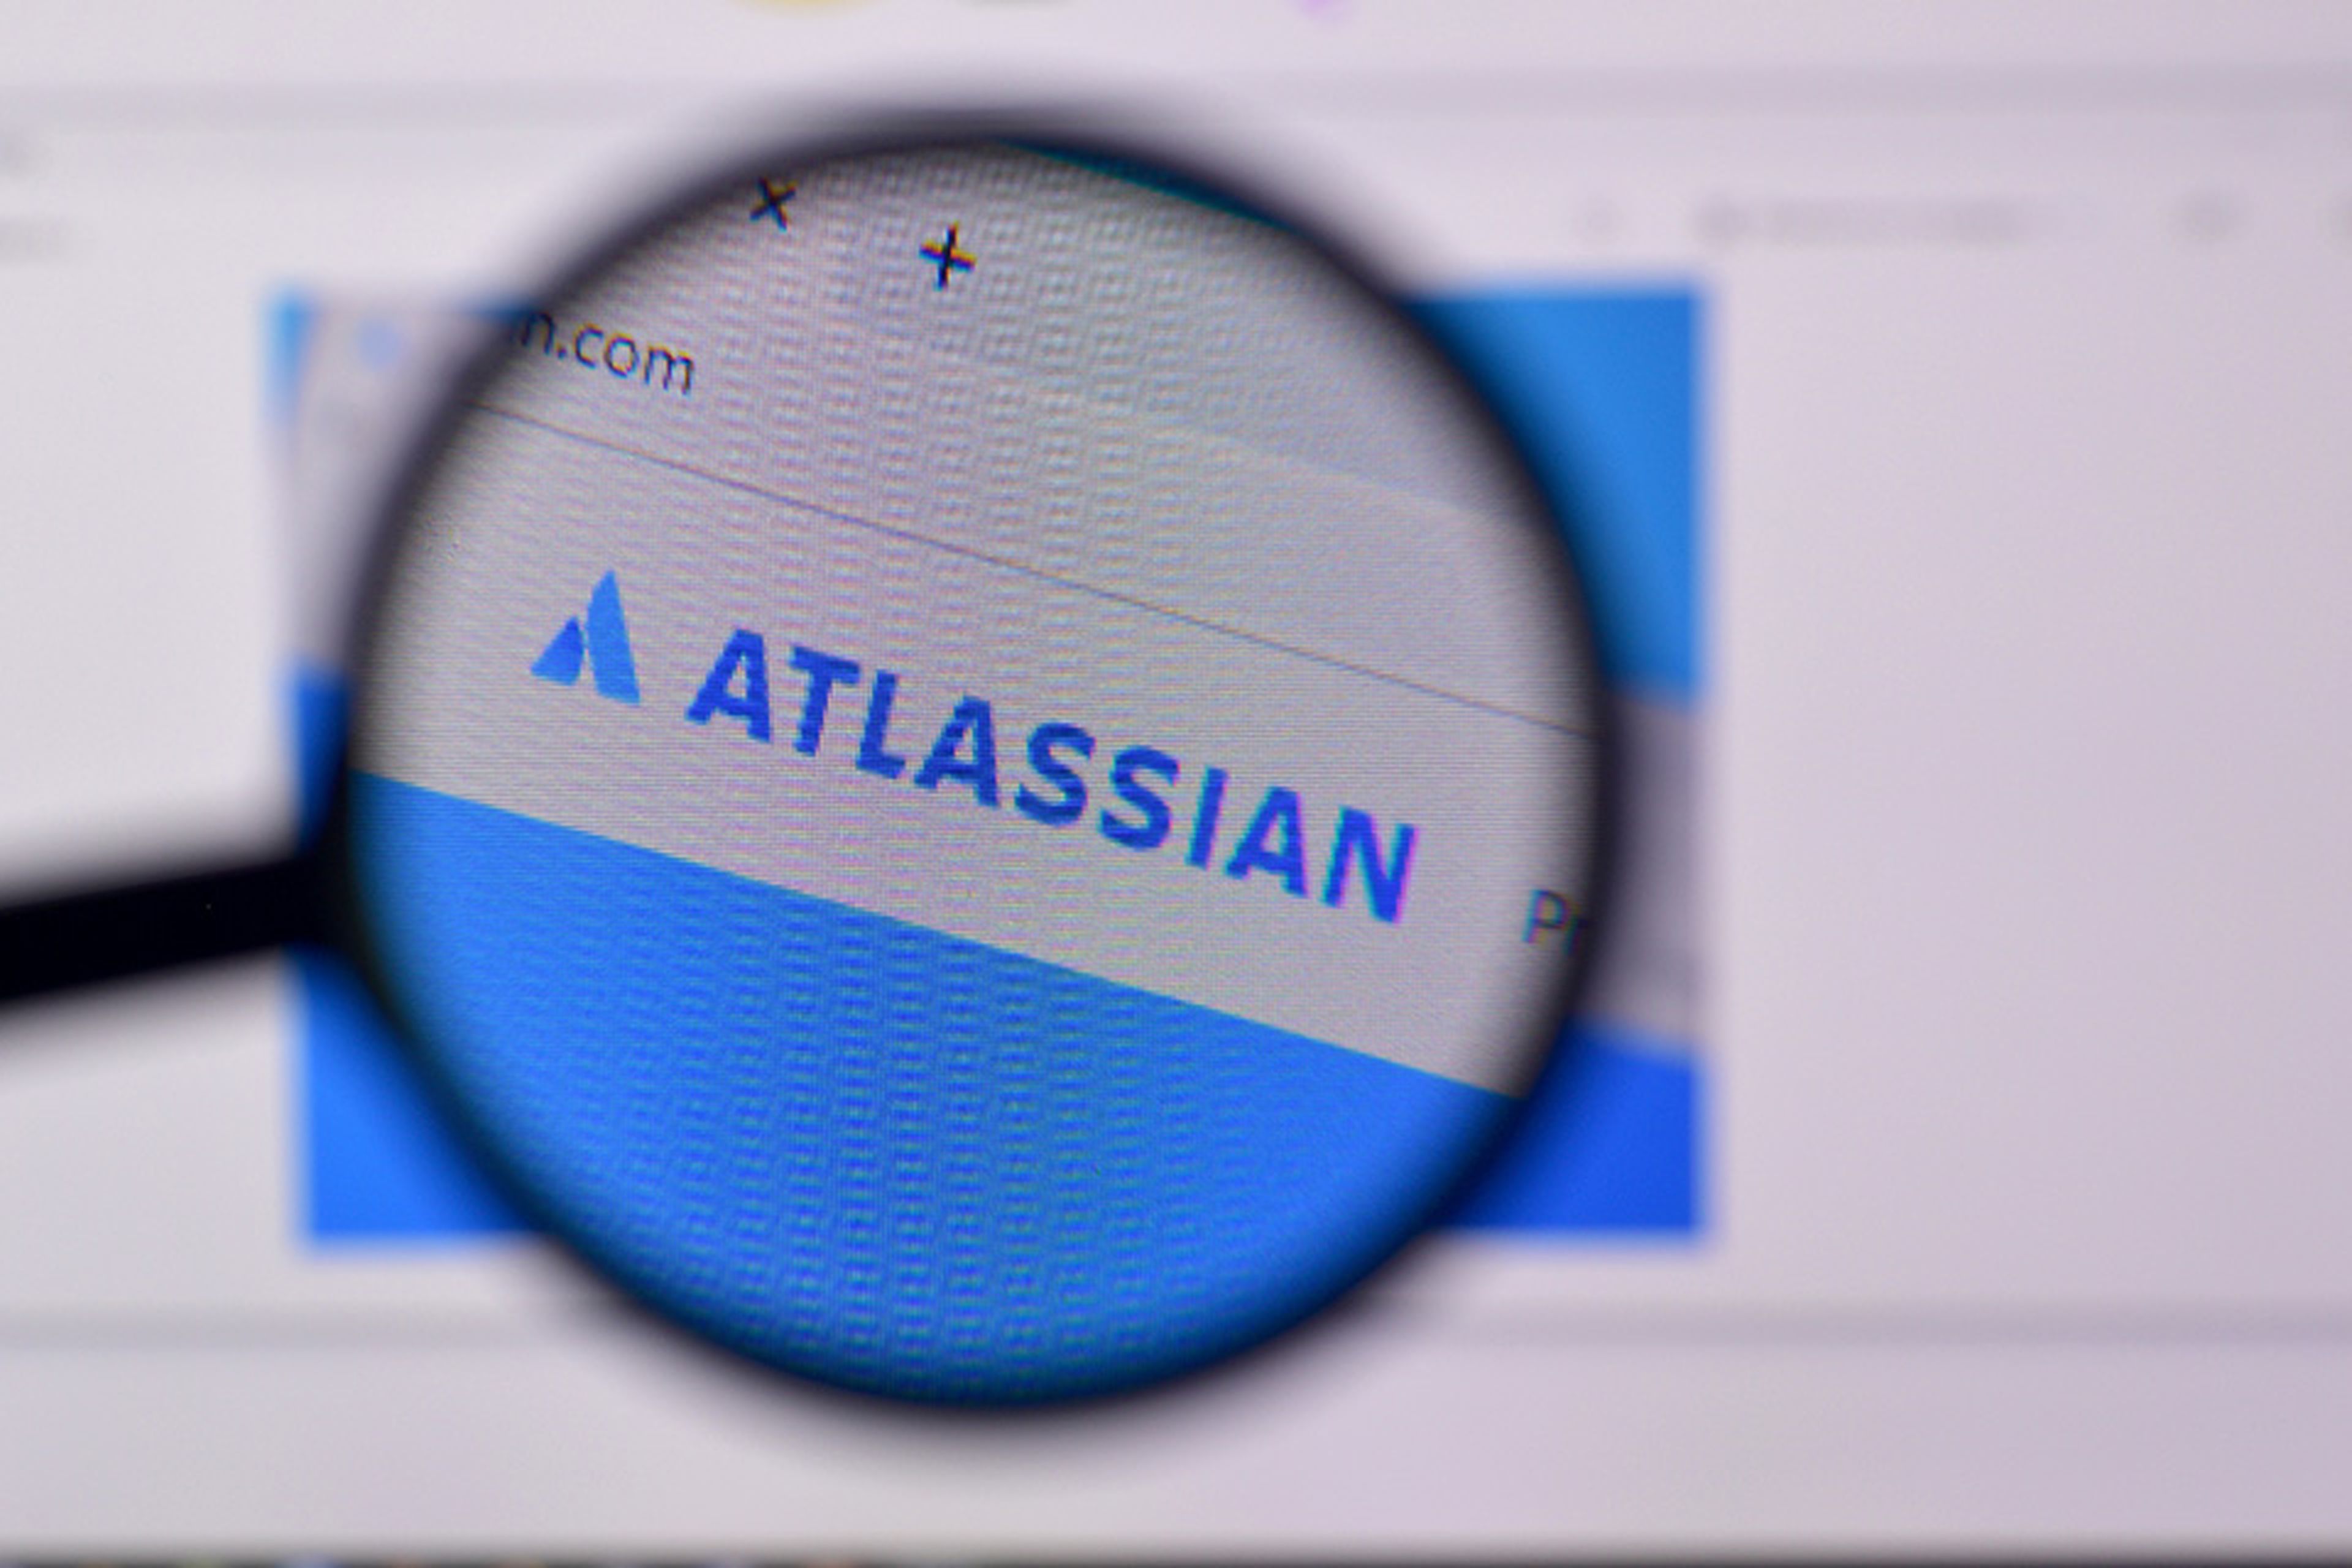 Homepage of atlassian website on the display of PC, url - atlassian.com.